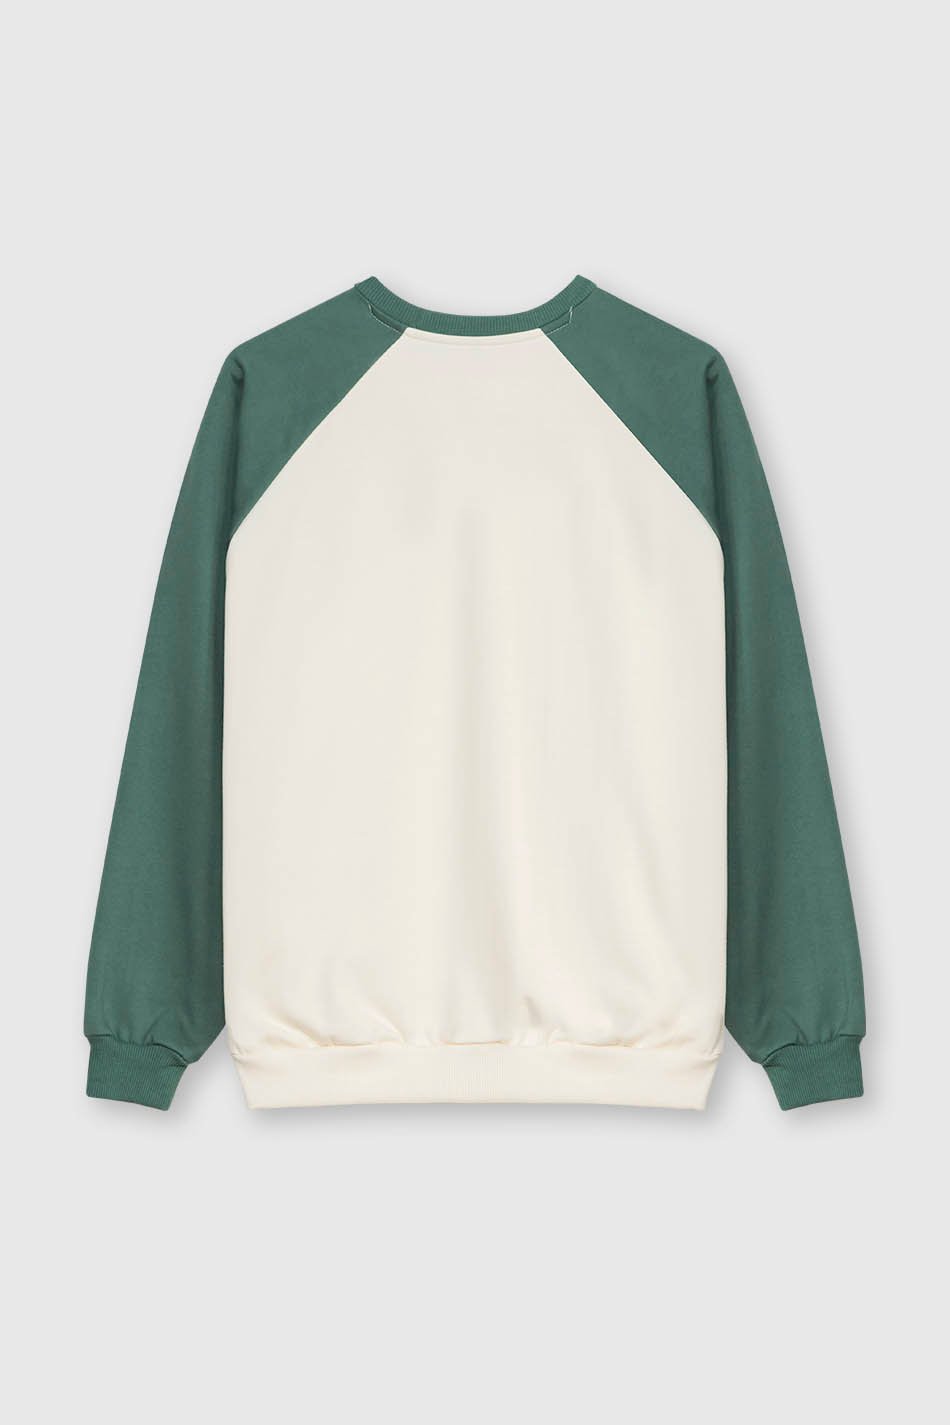 Ivy Heart Sweatshirt